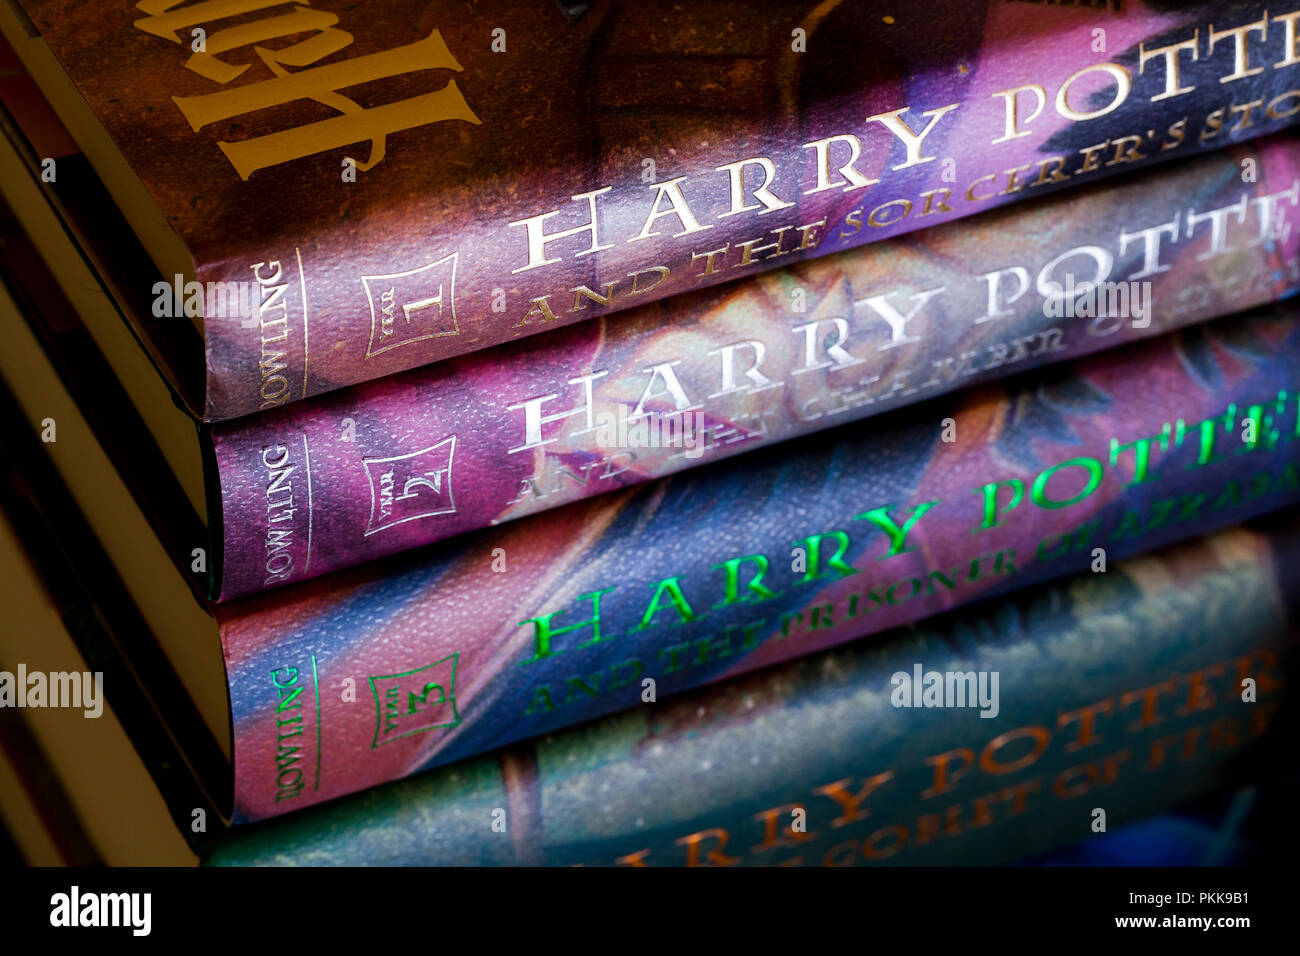 Harry Potter books (Harry Potter book) - USA Stock Photo